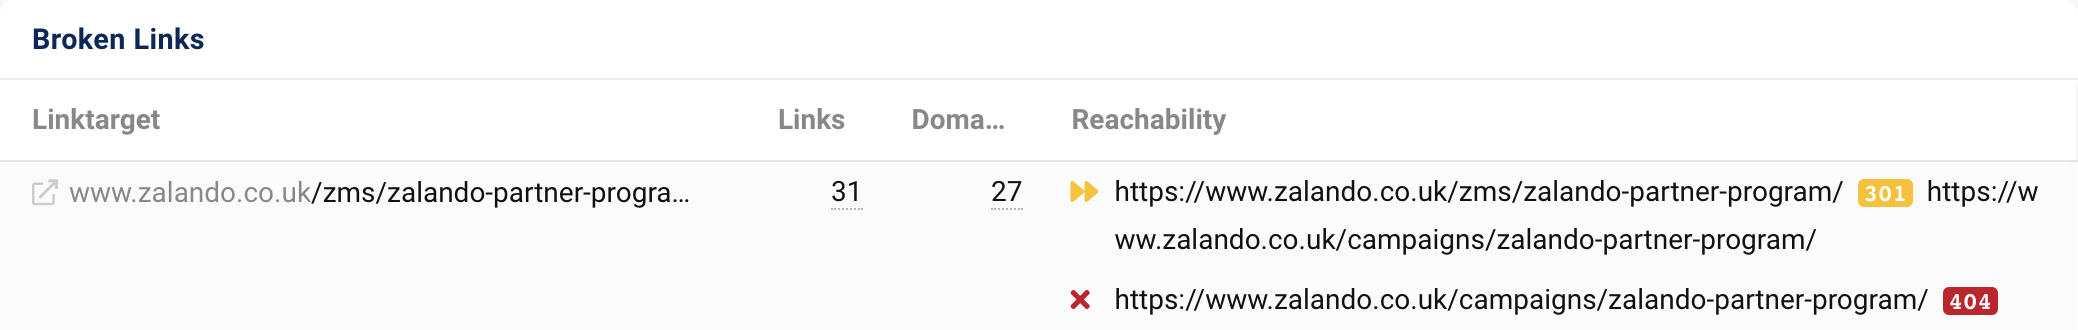 Target link zalando.co.uk/zms/zalando-partner-program/ mendapat 31 link dari 27 domain. Setelah pengalihan 301, URL menampilkan kode status 404.